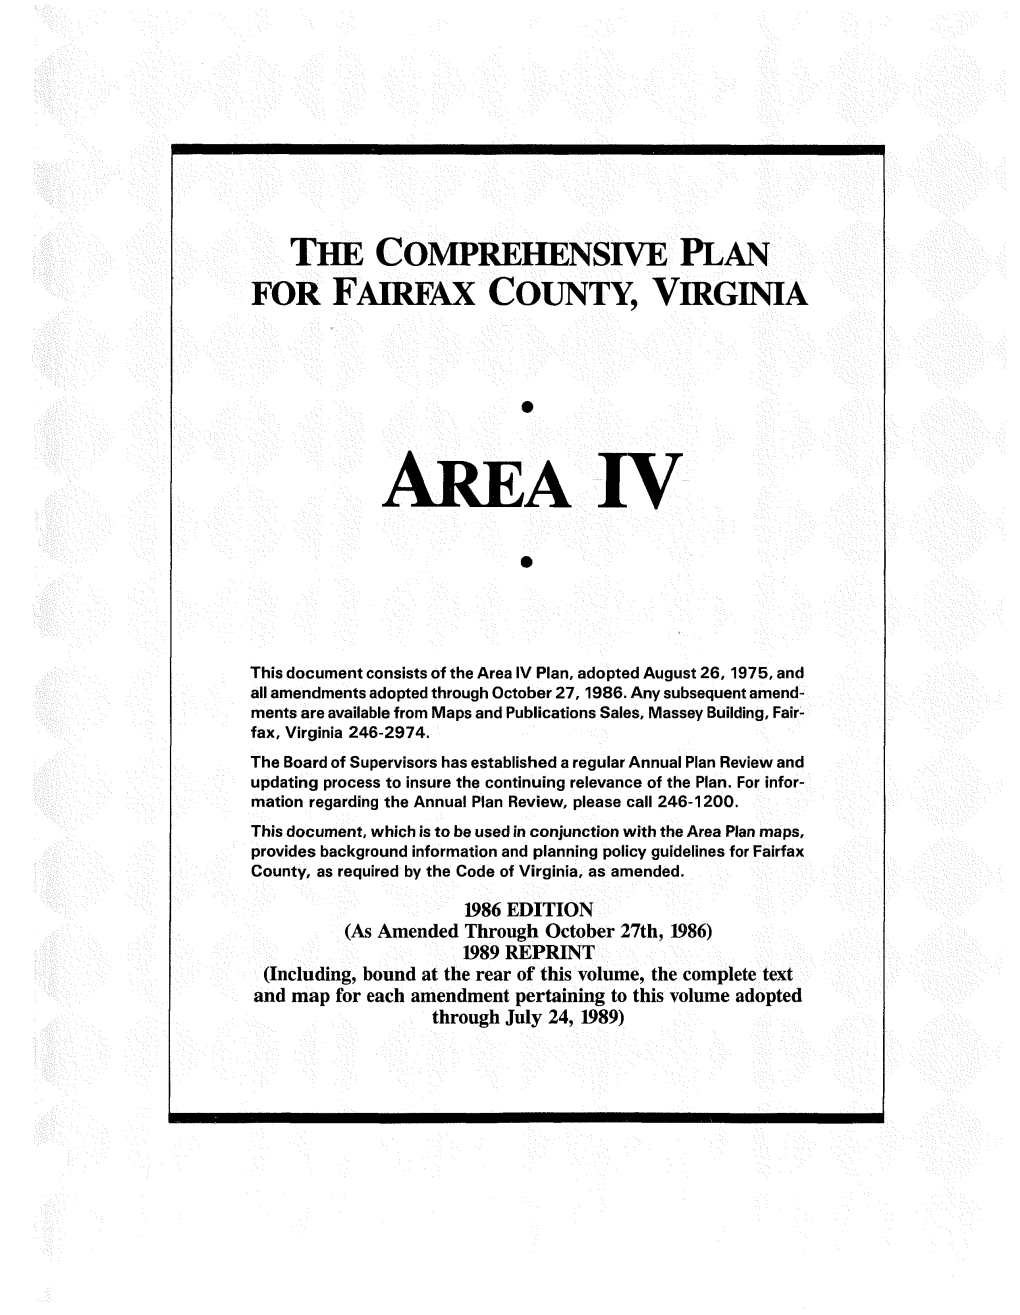 1986 Comprehensive Plan, 1989 Reprint